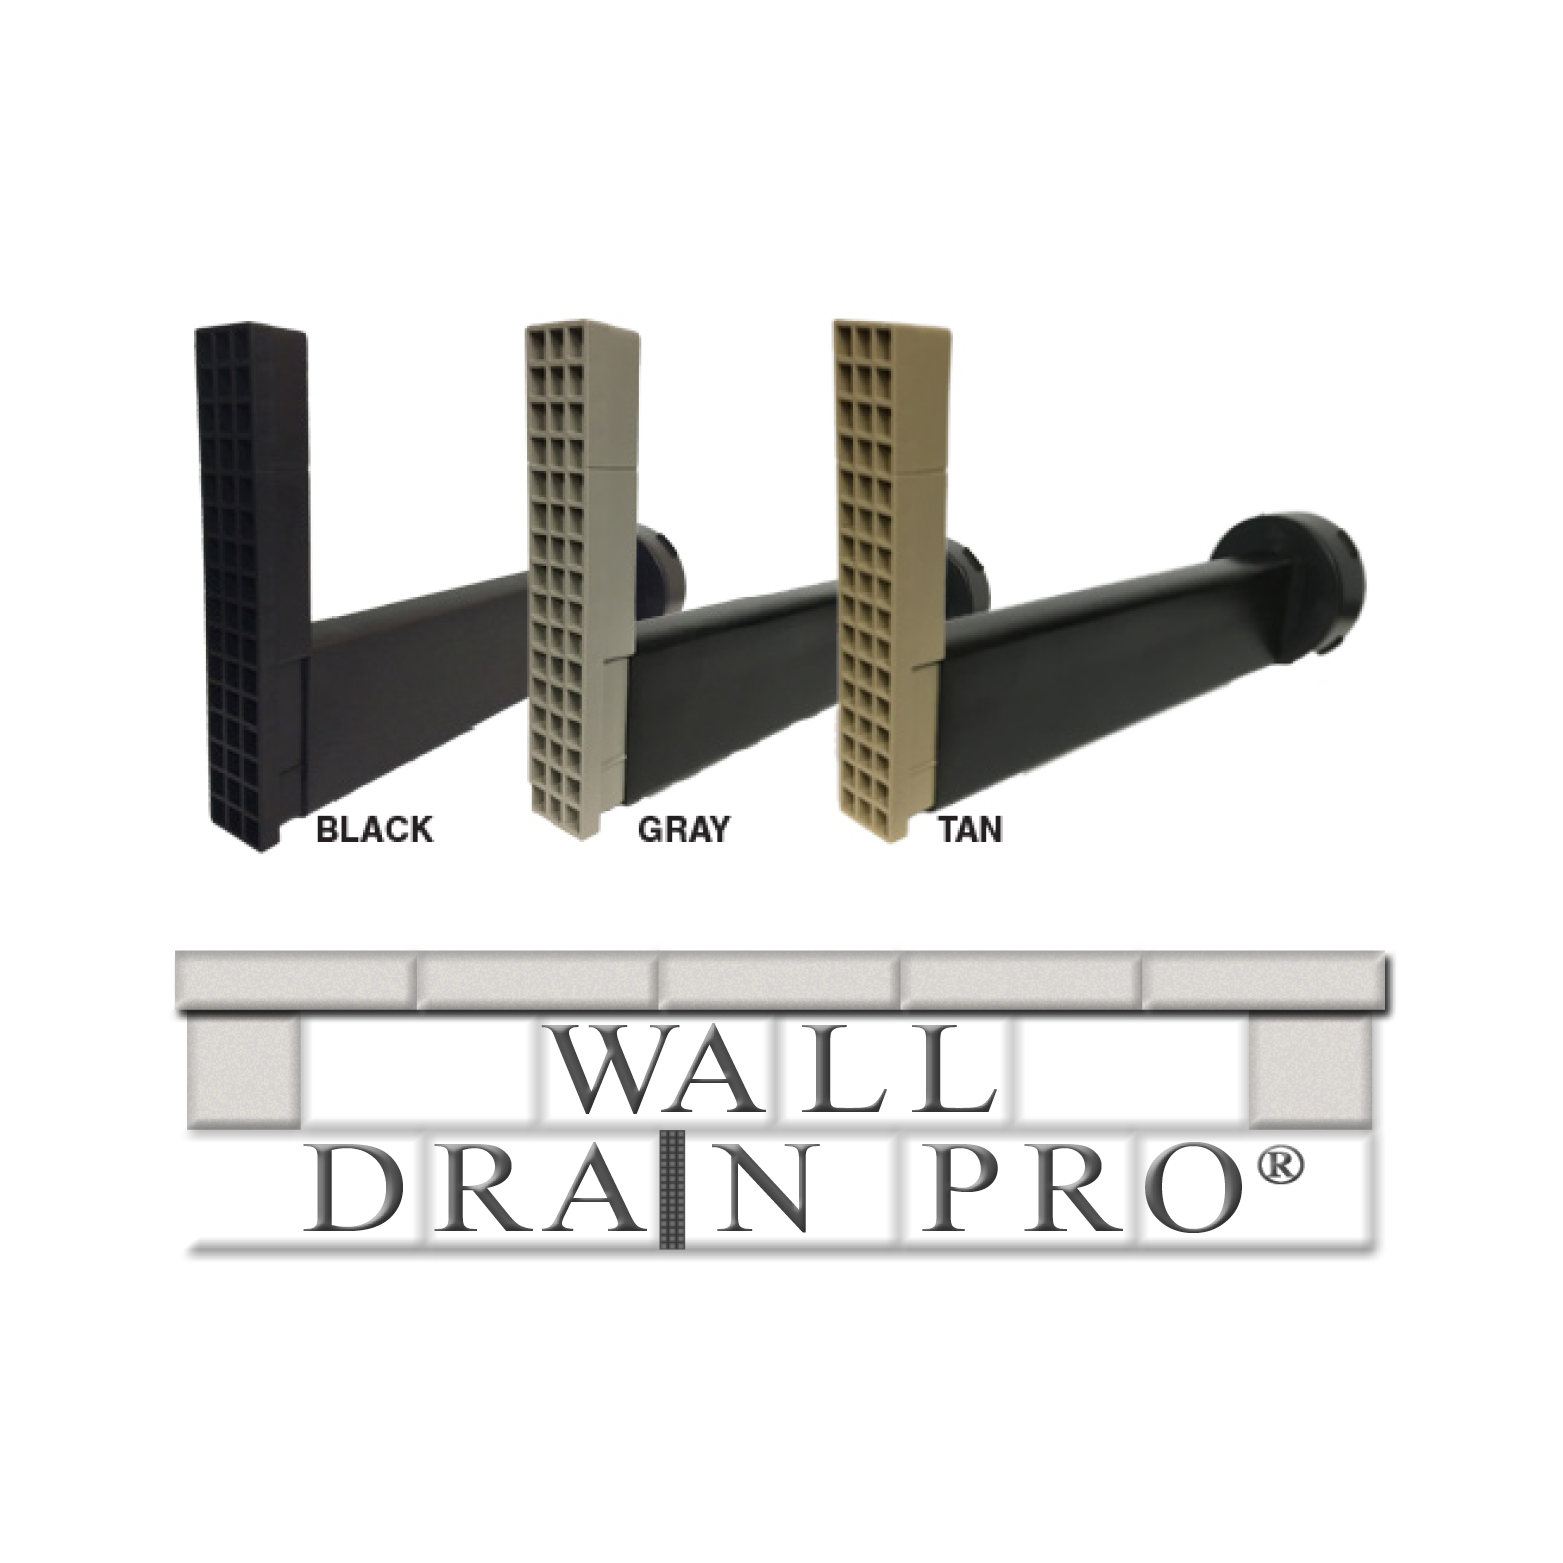 Wall drain pro retaining wall hidden drain 